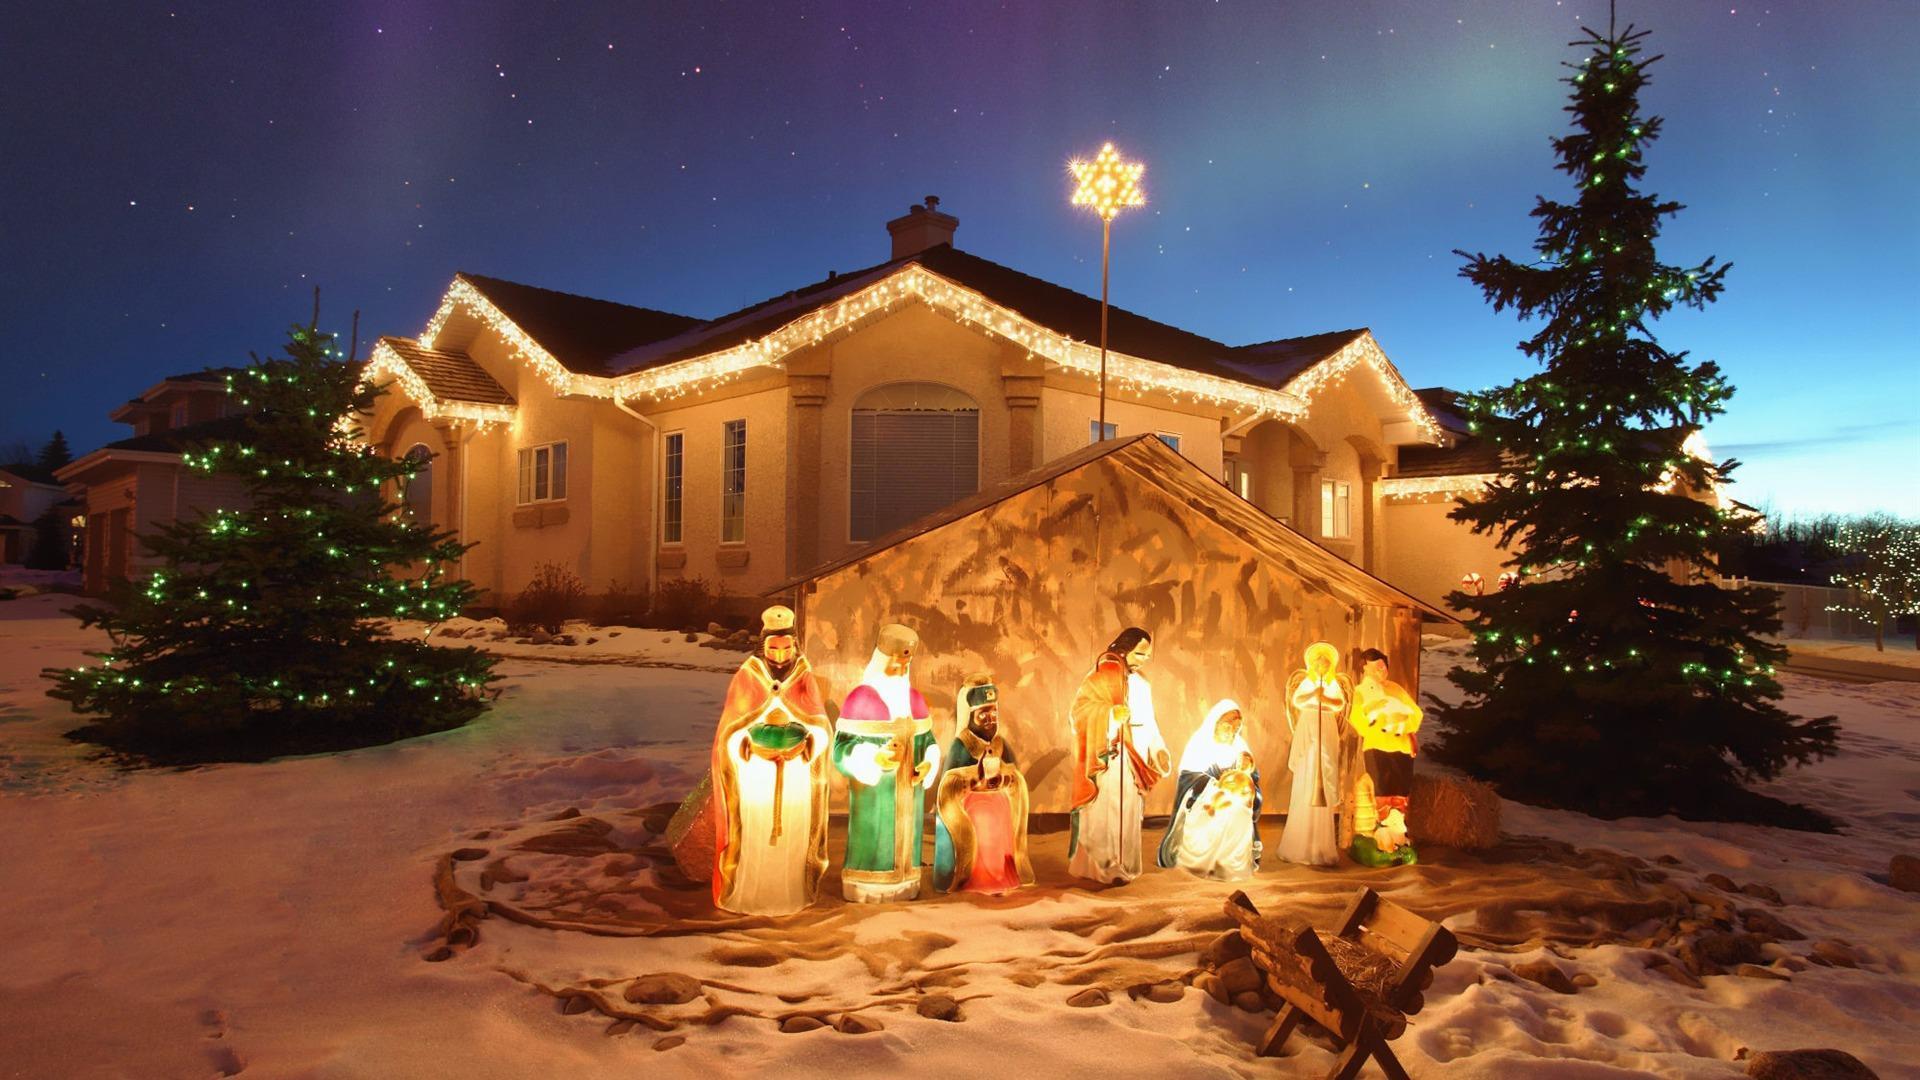 HD wallpaper, House, Nativity, Christmas Lights, Star, Christmas Nativity, Snow, Tree